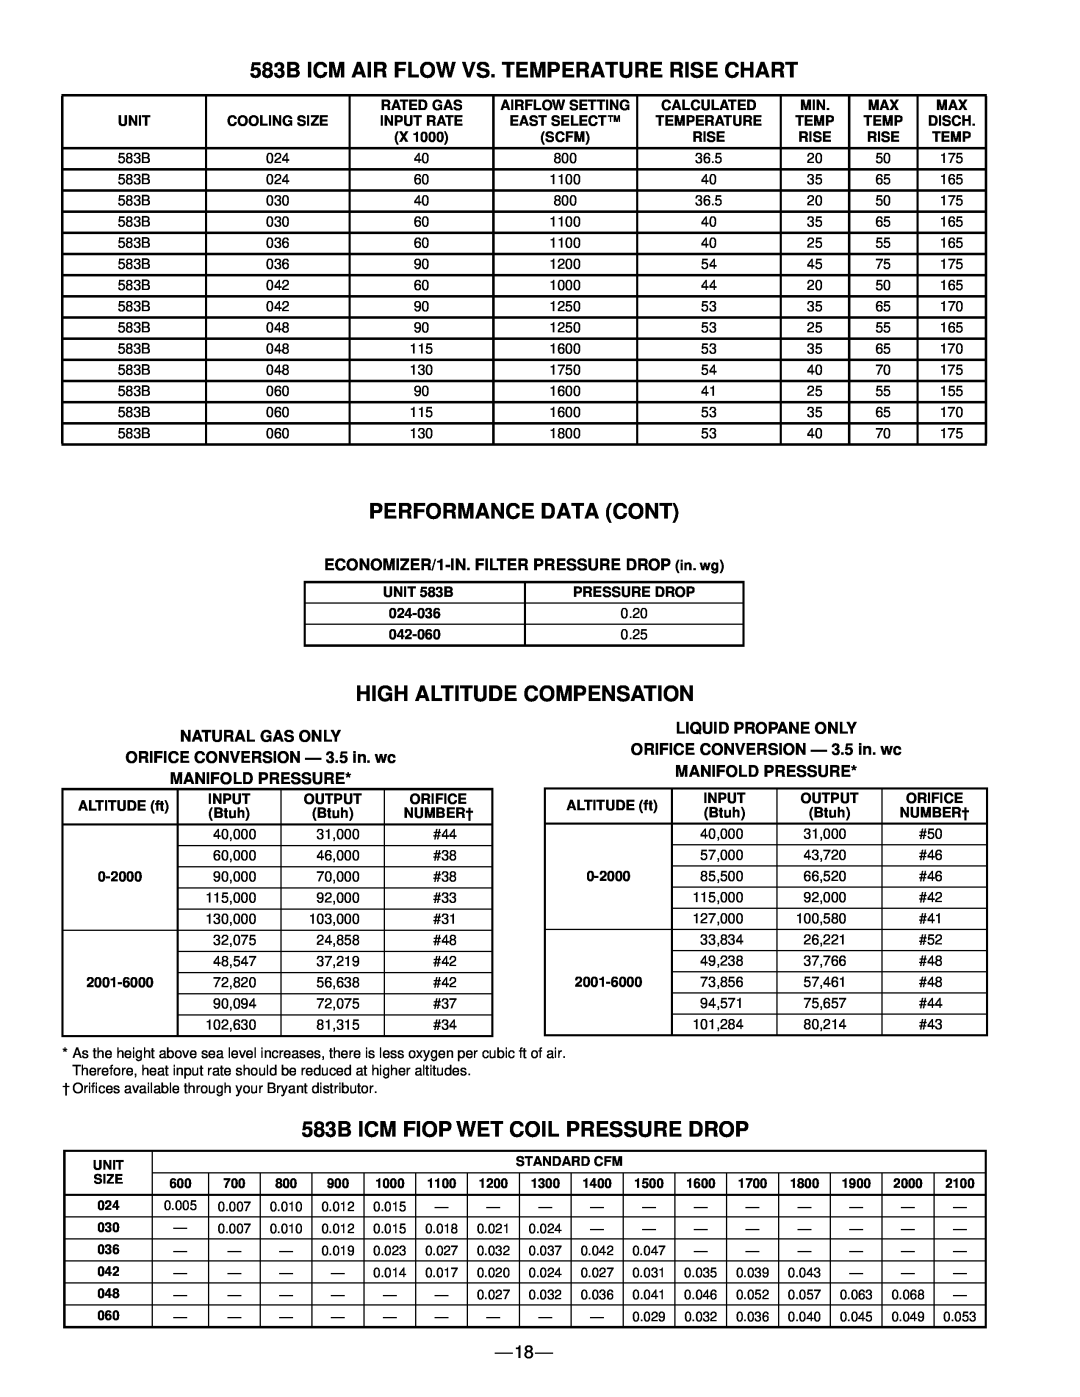 Bryant manual 583B ICM AIR FLOW VS. TEMPERATURE RISE CHART, Performance Data Cont, High Altitude Compensation 